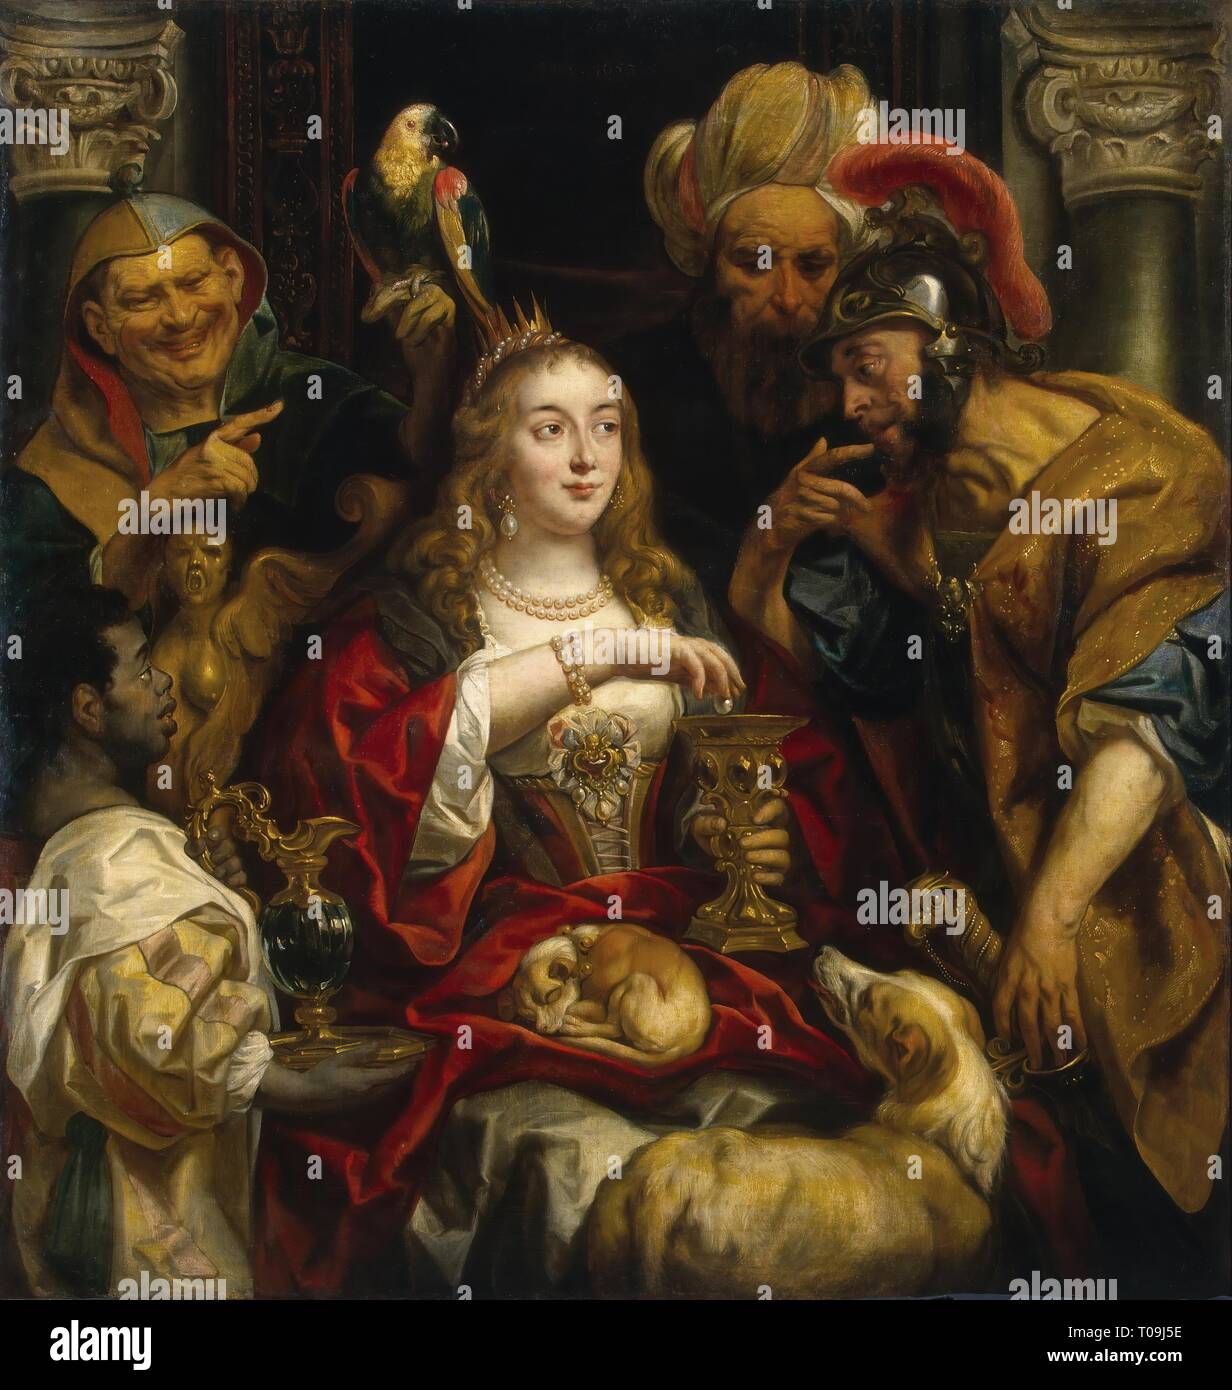 'Cleopatra's Feast'. Flanders, 1653. Dimensions: 156,4x149,3 cm. Museum: State Hermitage, St. Petersburg. Author: JACOB JORDAENS. Stock Photo